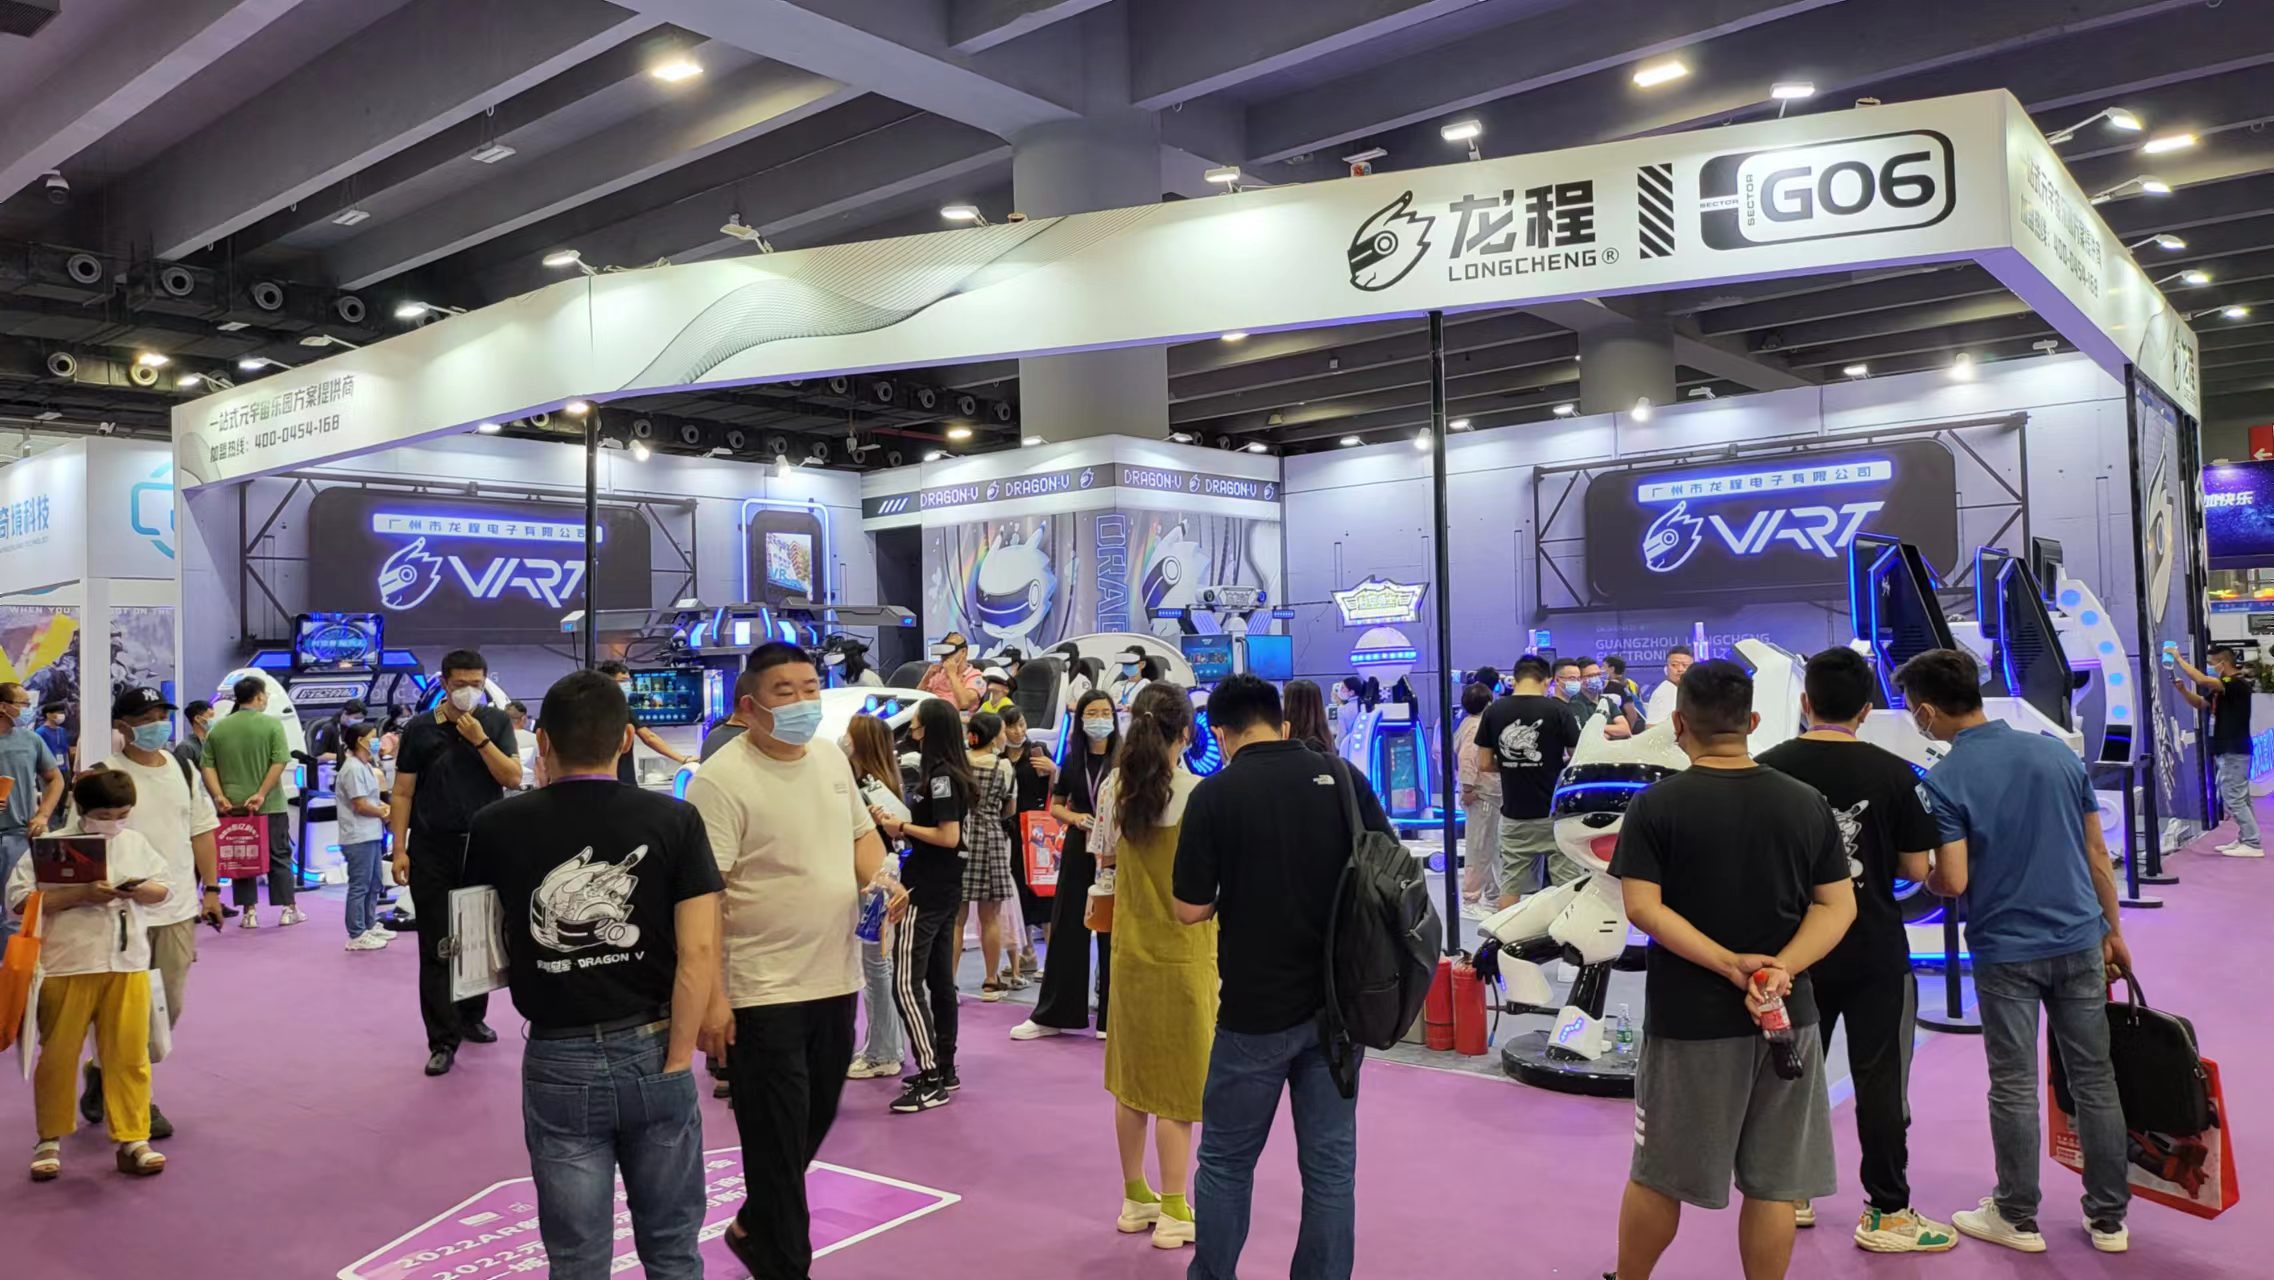 VART VR |Guangzhou Metaverse கண்காட்சி சாவடி G06 மிகவும் பிரபலமானது